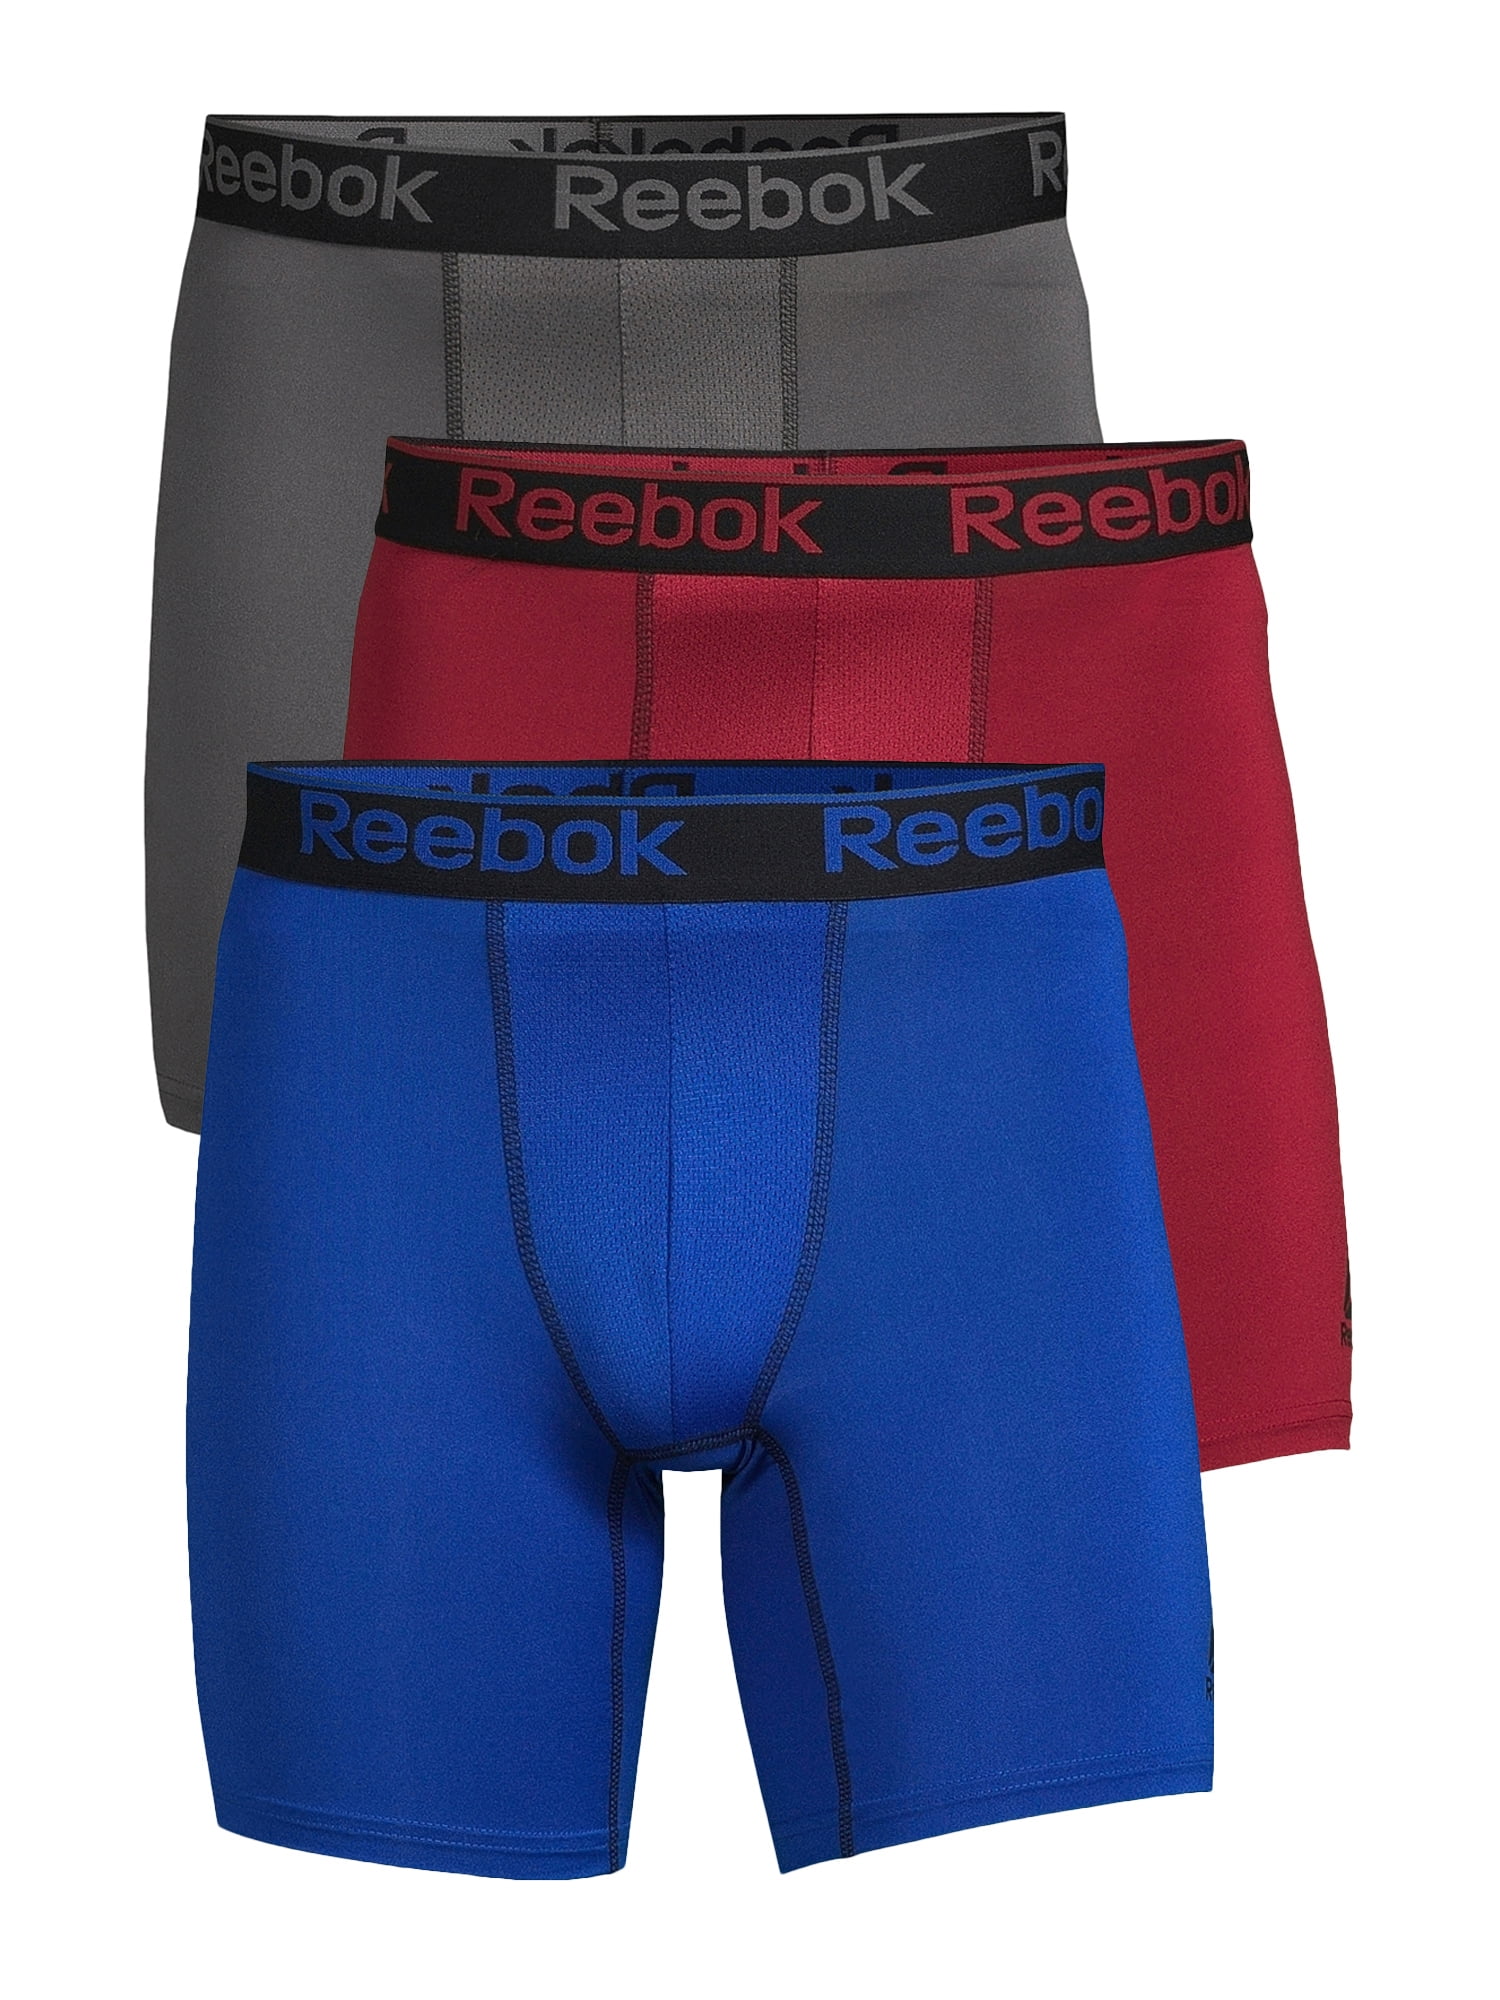 Reebok Men's Compression Long Length Performance Boxer Briefs 3 Pack 